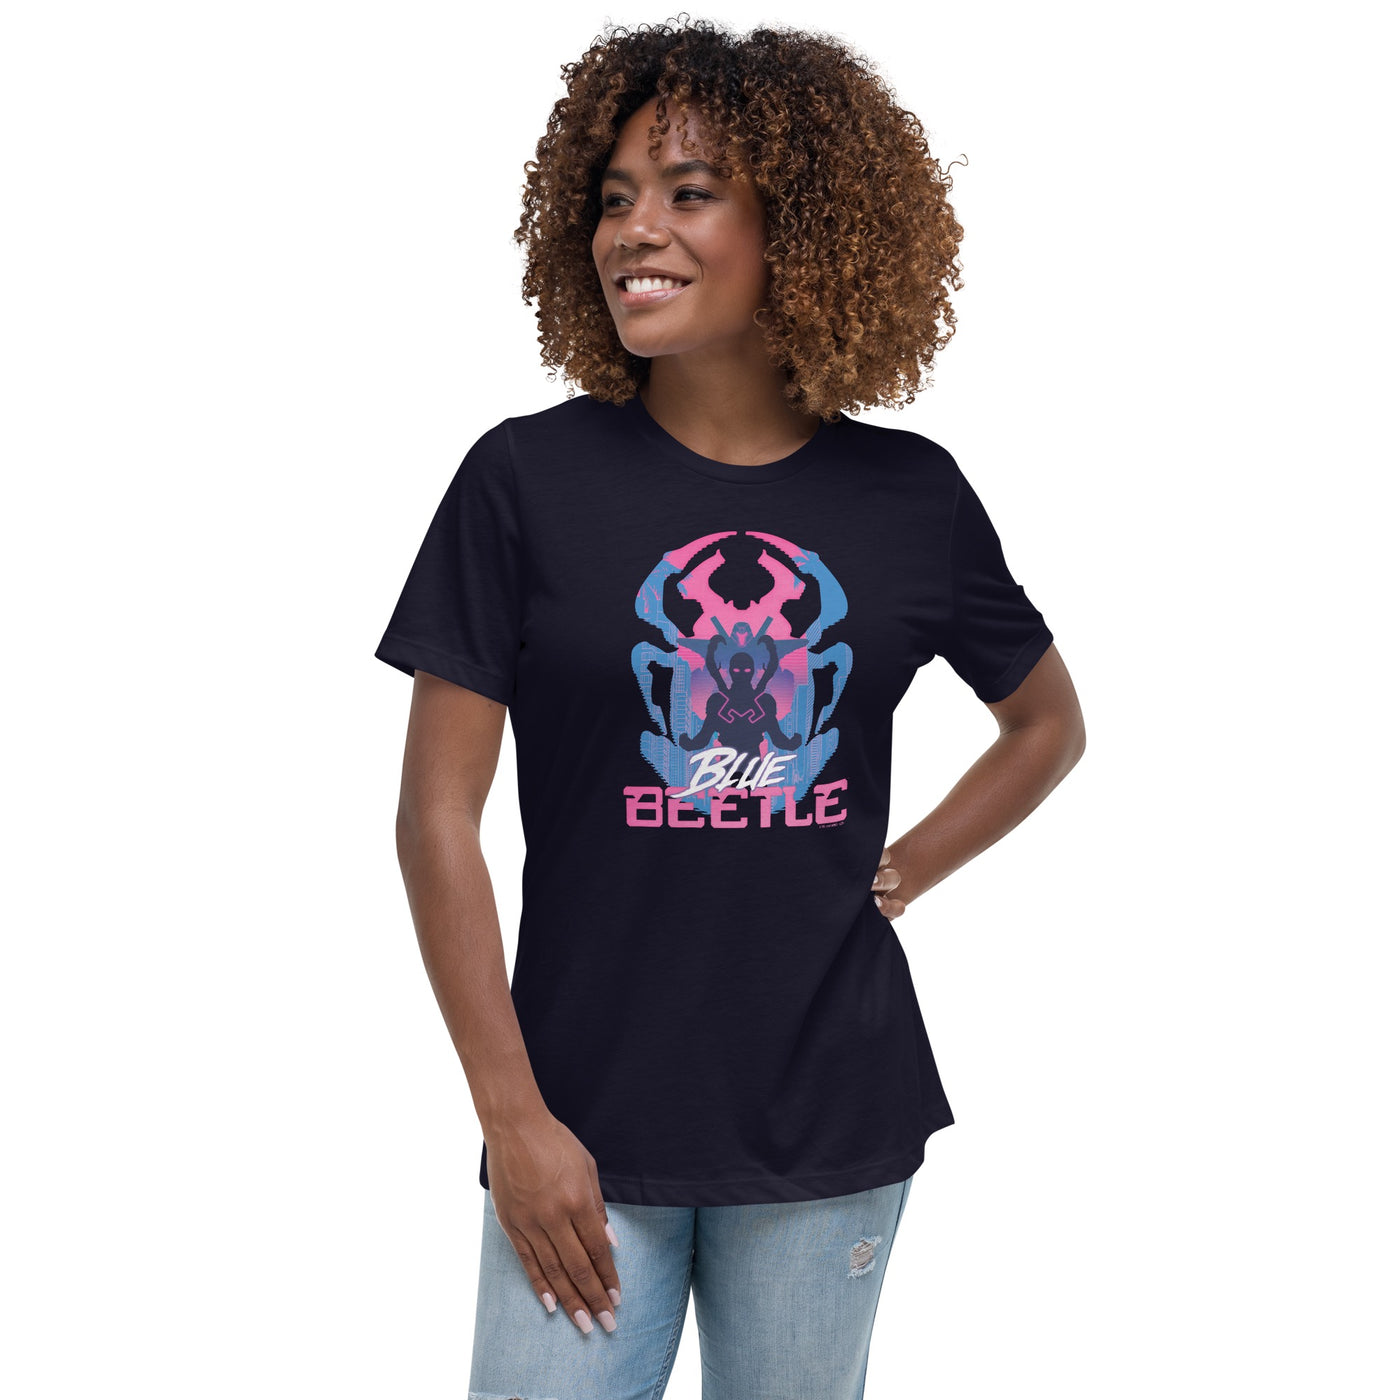 Blue Beetle Silhouette Women's T-Shirt